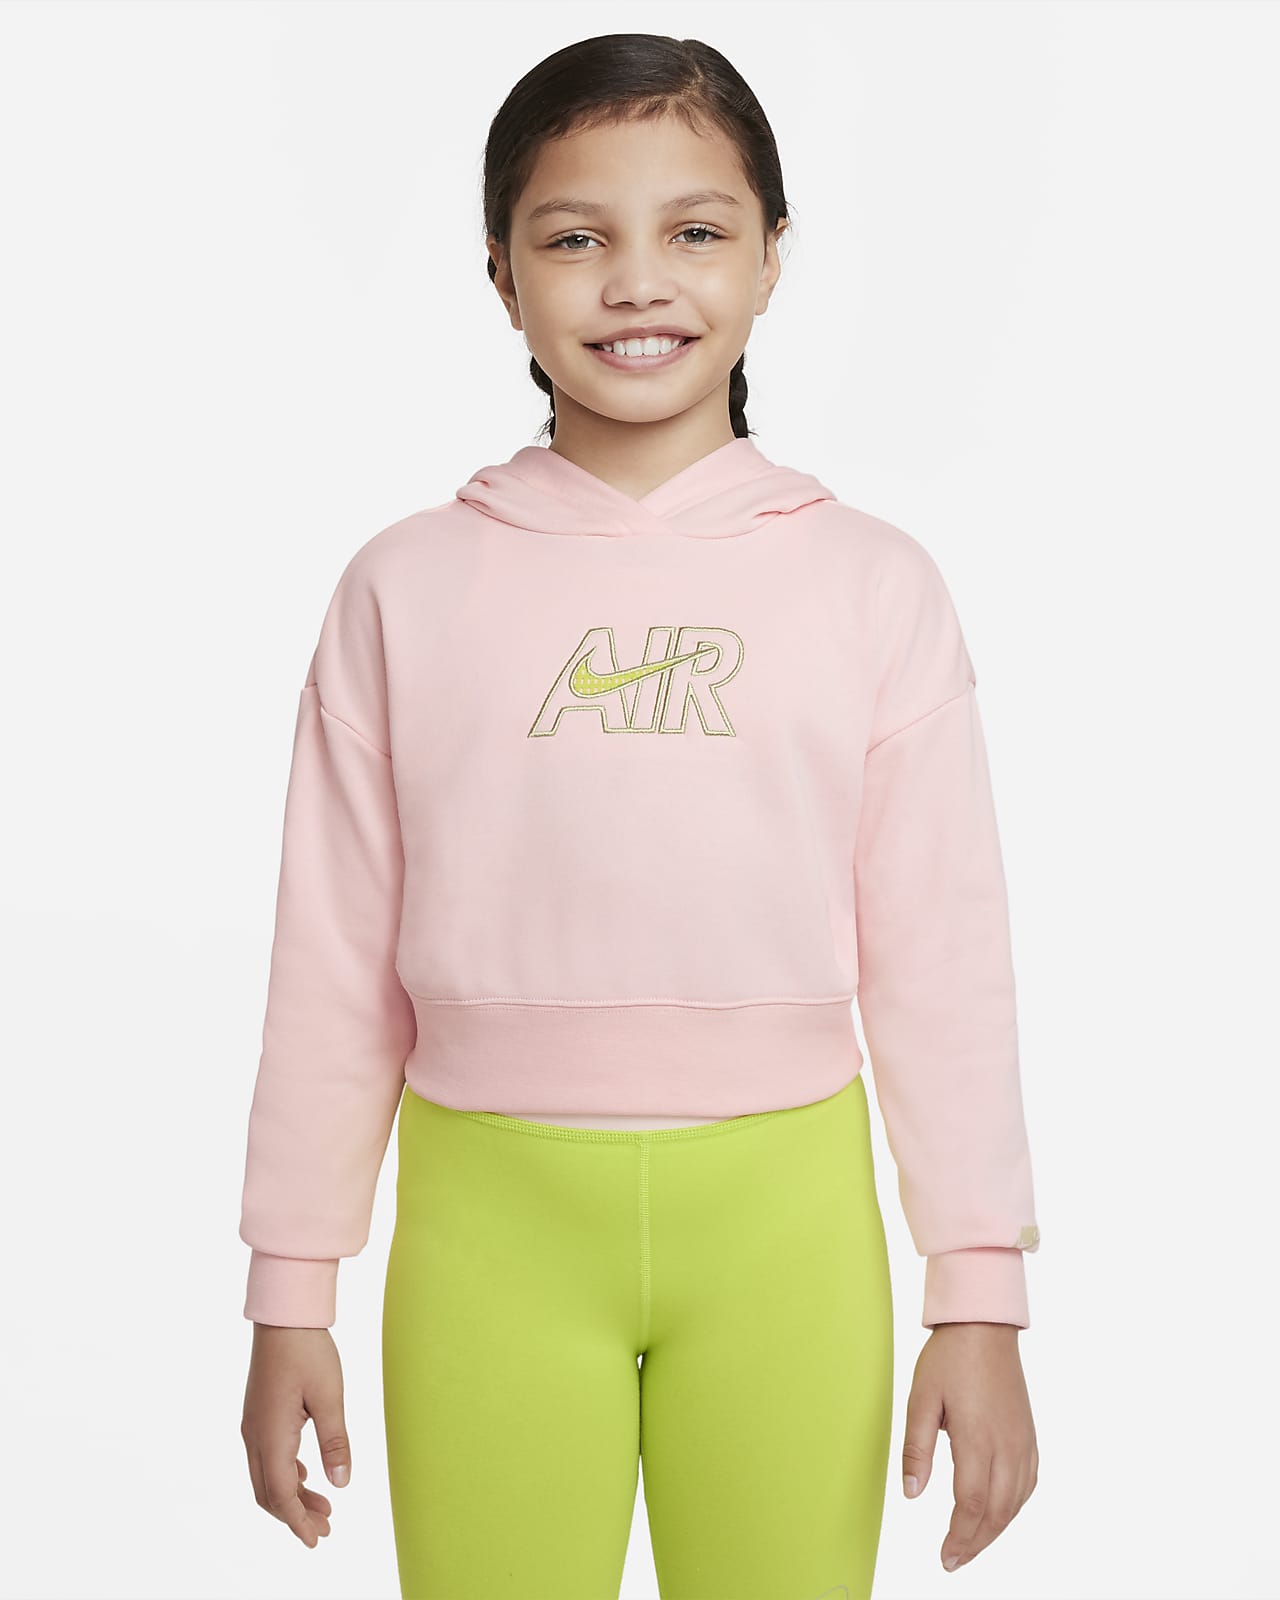 Girls Older Kids (XS-XL) Pink Sports Bras. Nike IE